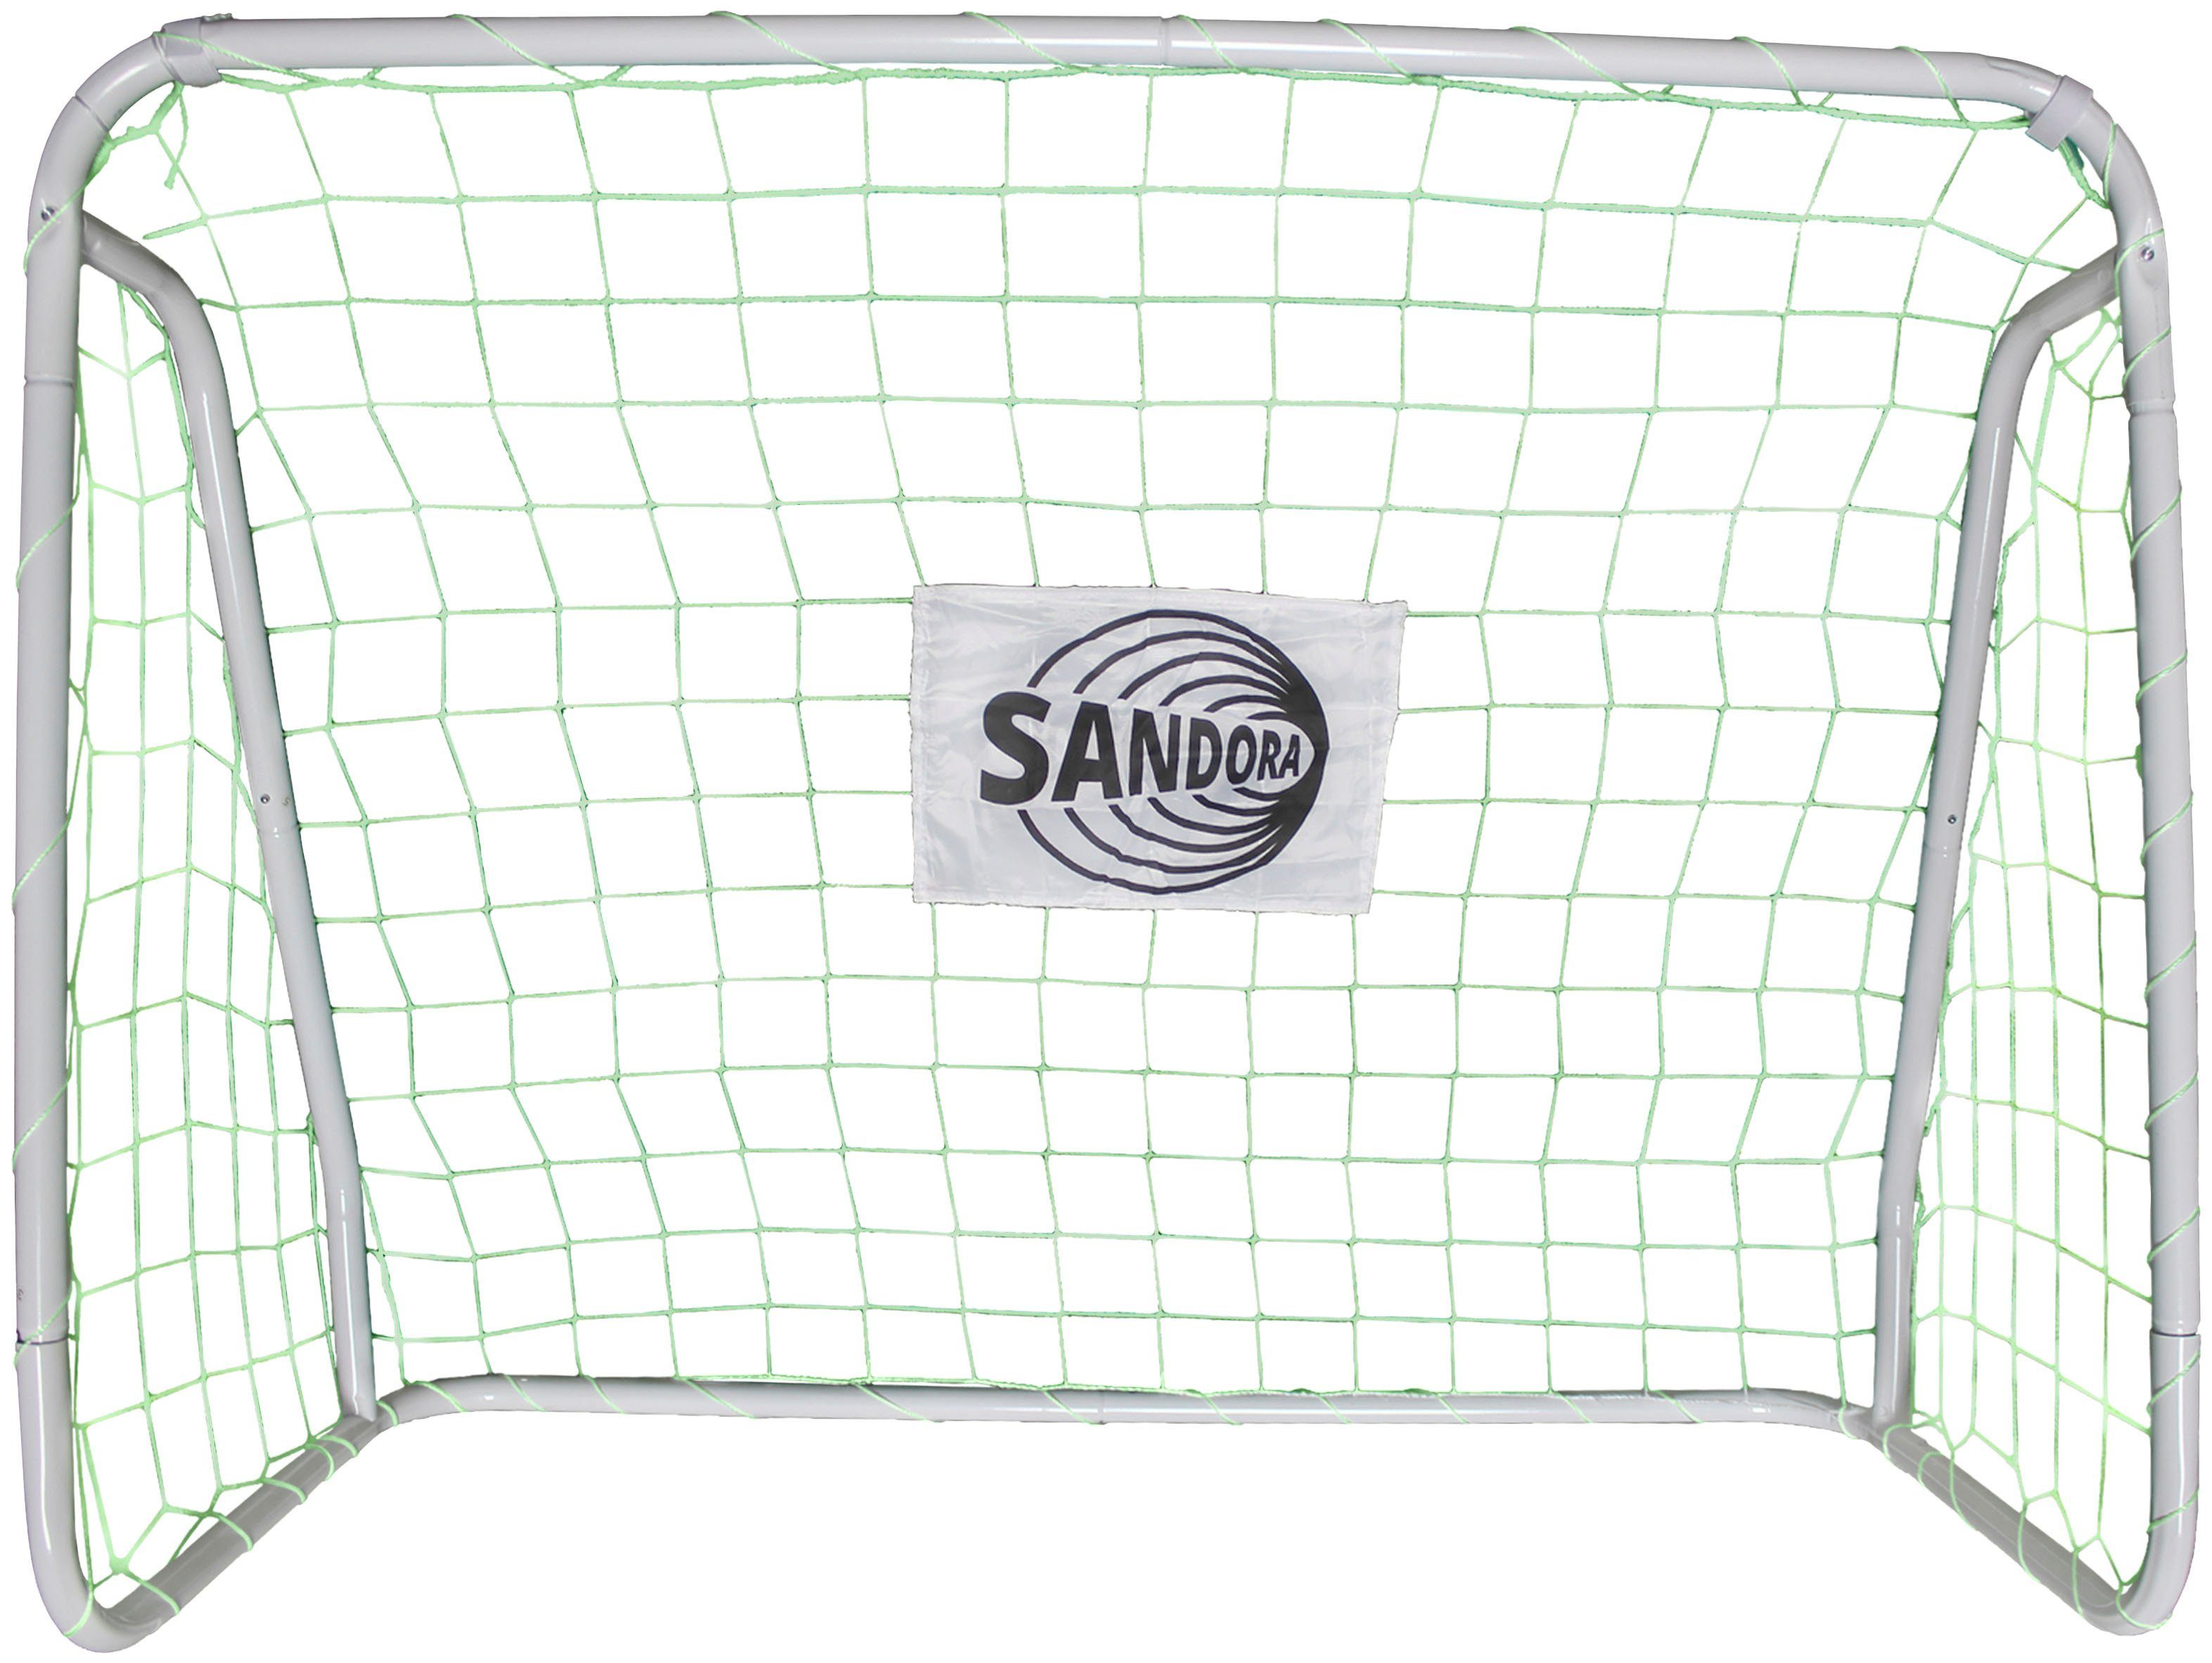 2 Sandora grünem Fußballtor St), Netz SANDORA mit (Set, 124x96x61cm